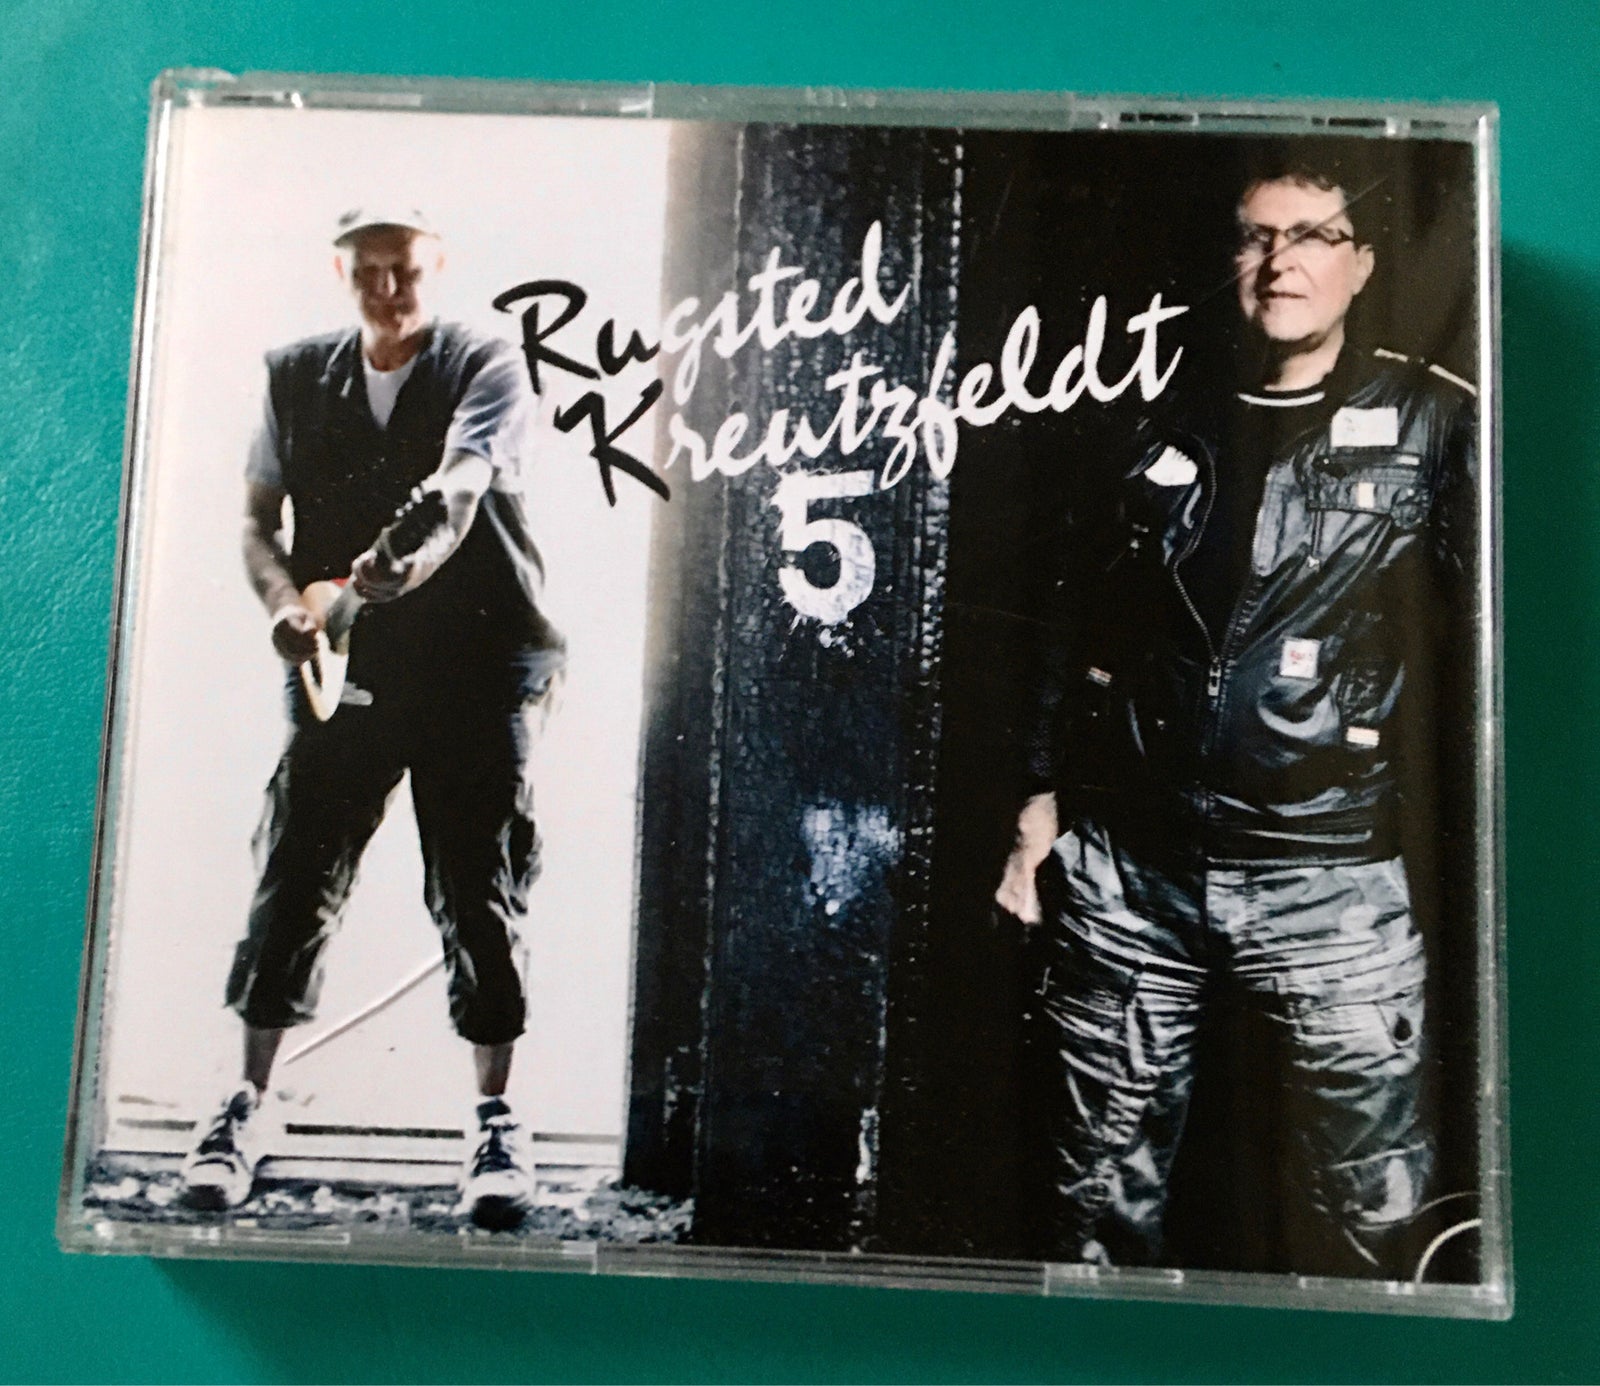 Rugsted Kreutzfeldt (DVD+2CD): Rugsted Kreutzfeldt 5,